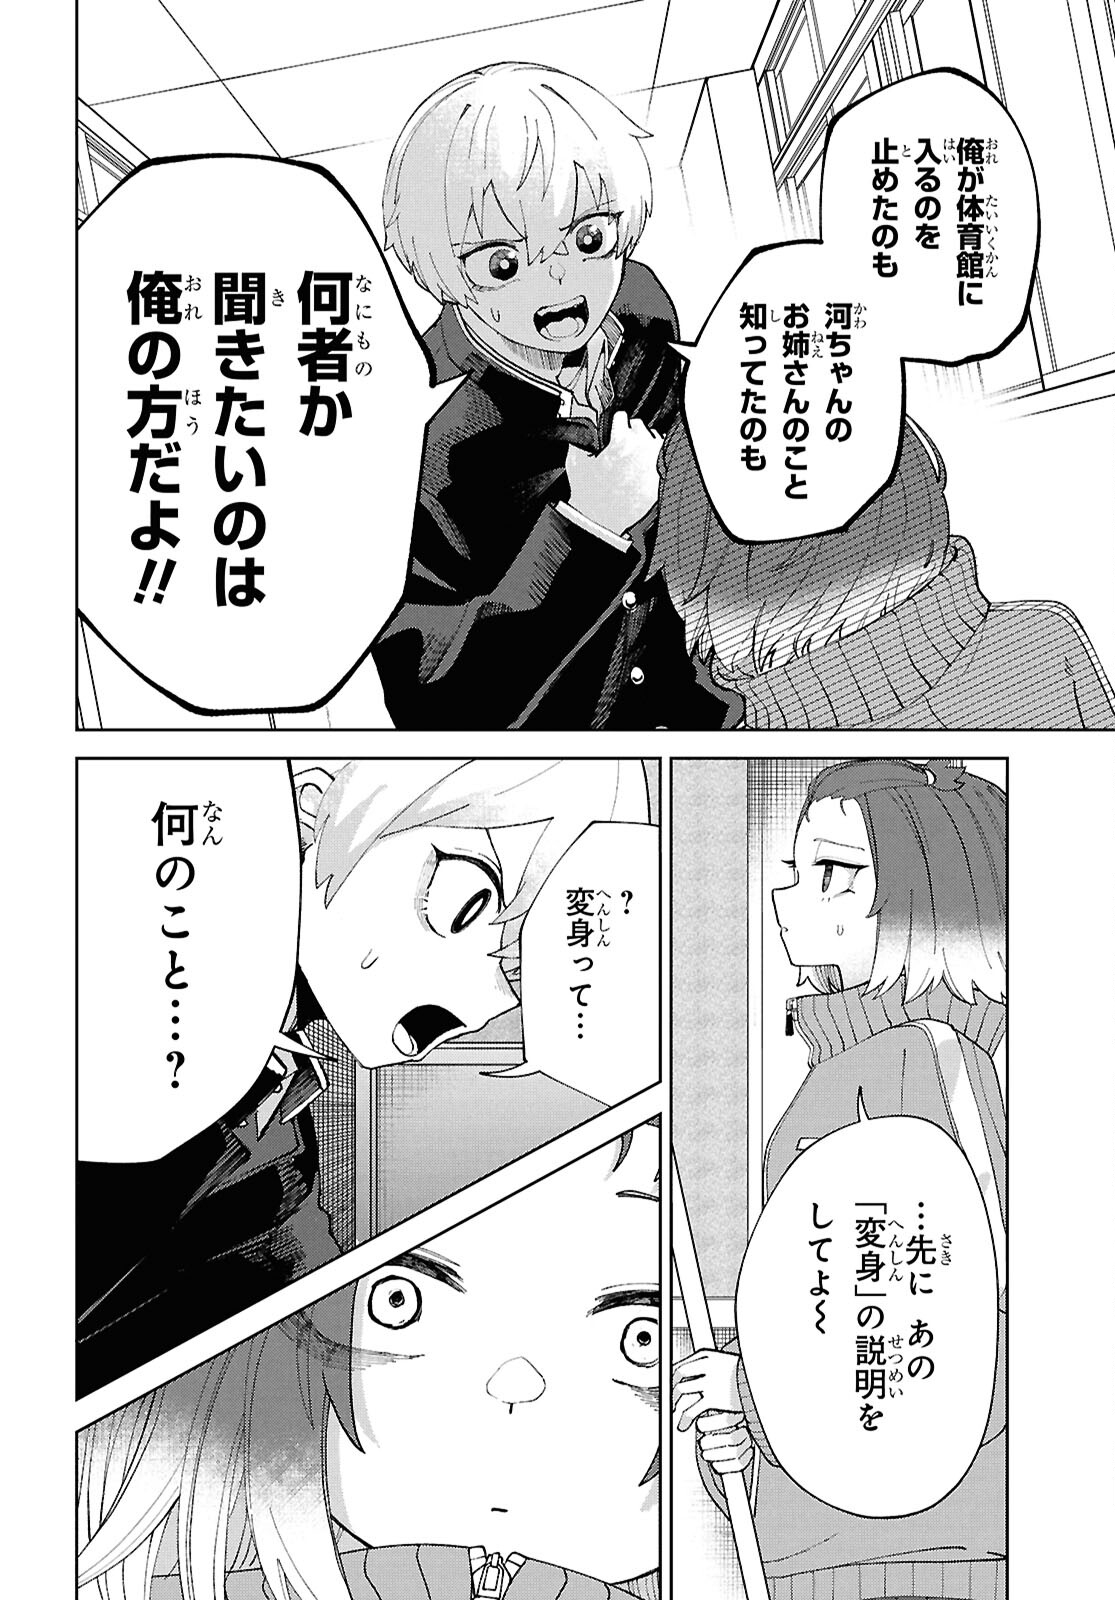 Garuru Girl - Chapter 4 - Page 18